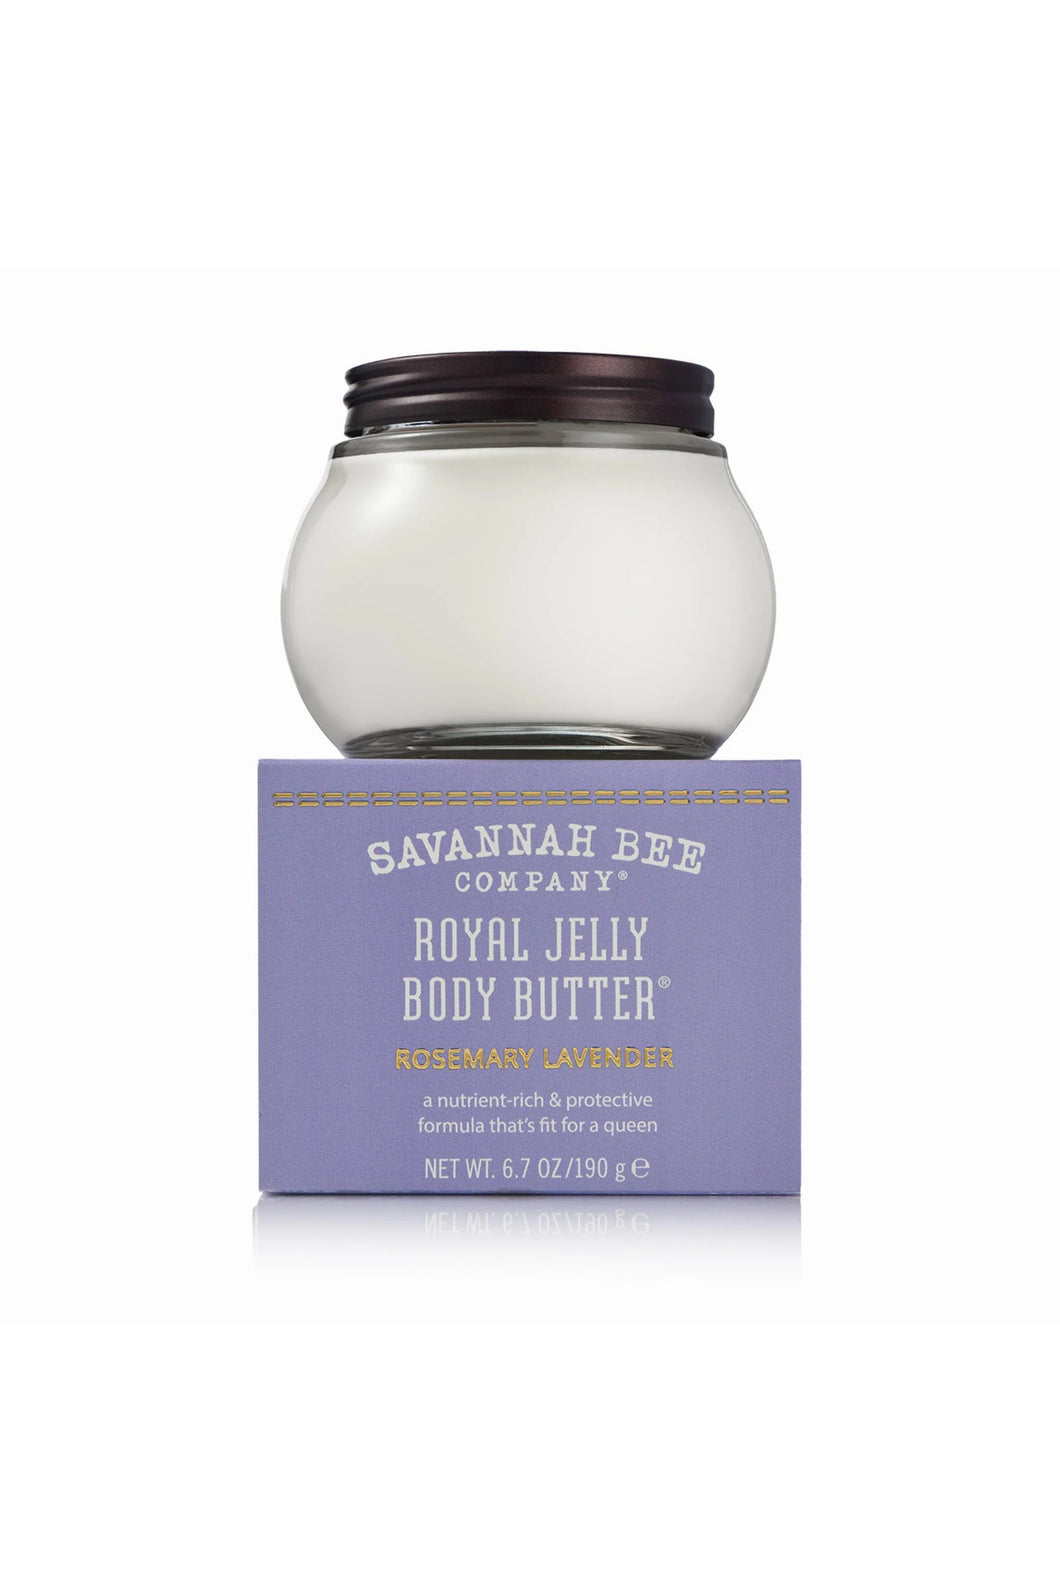 Rosemary Lavender Royal Jelly Body Butter - Savannah Bee Company